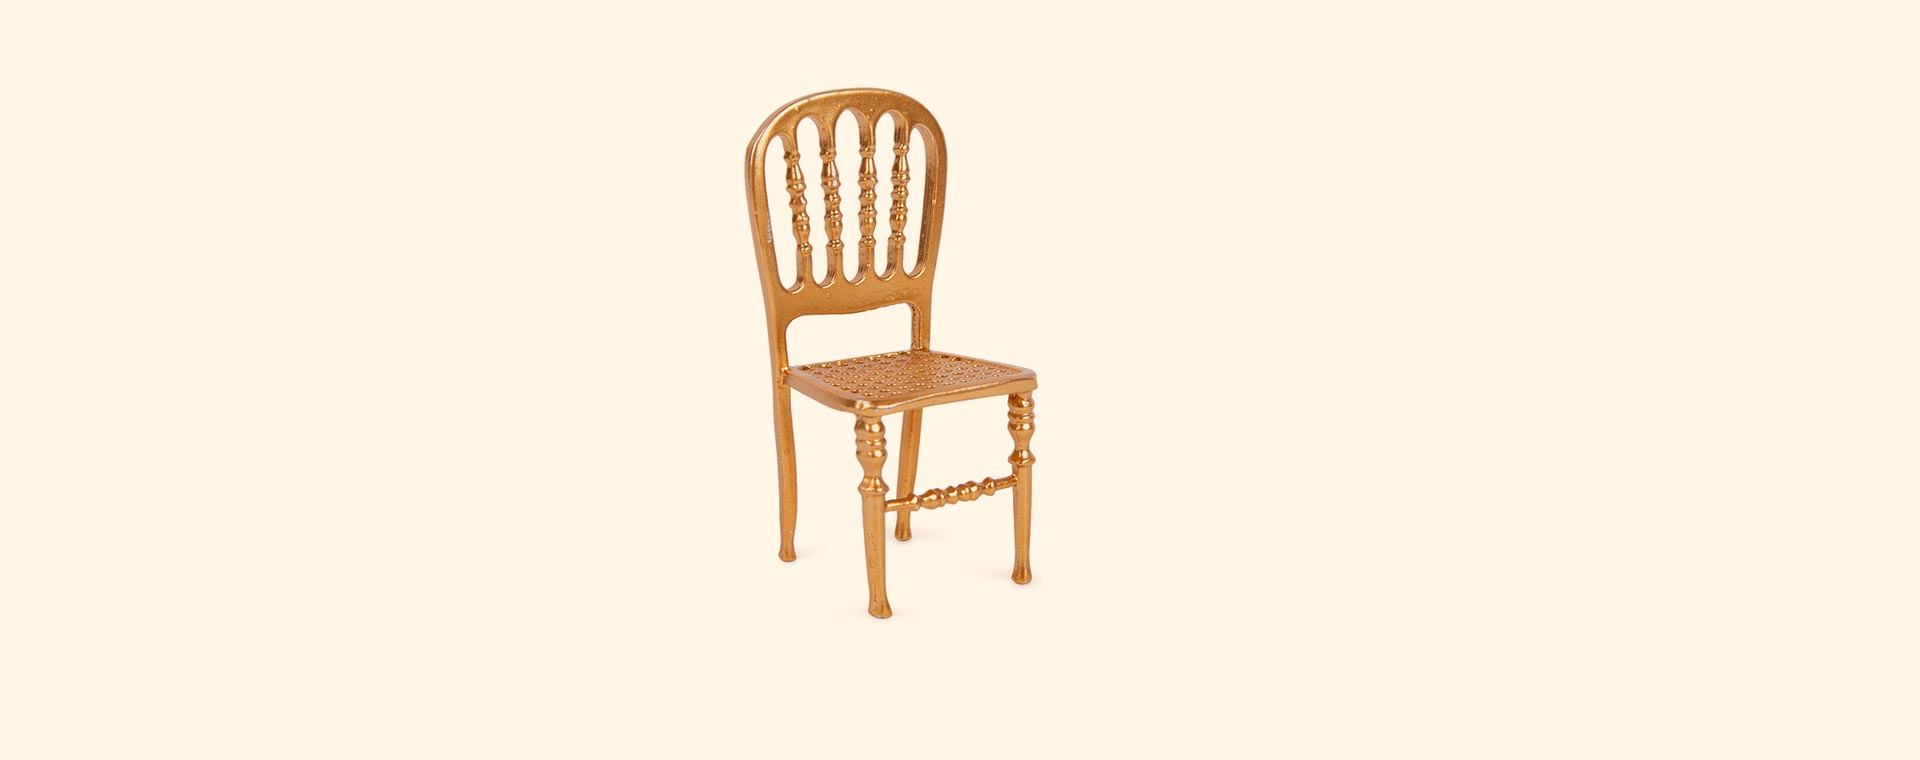 Gold Maileg Chair